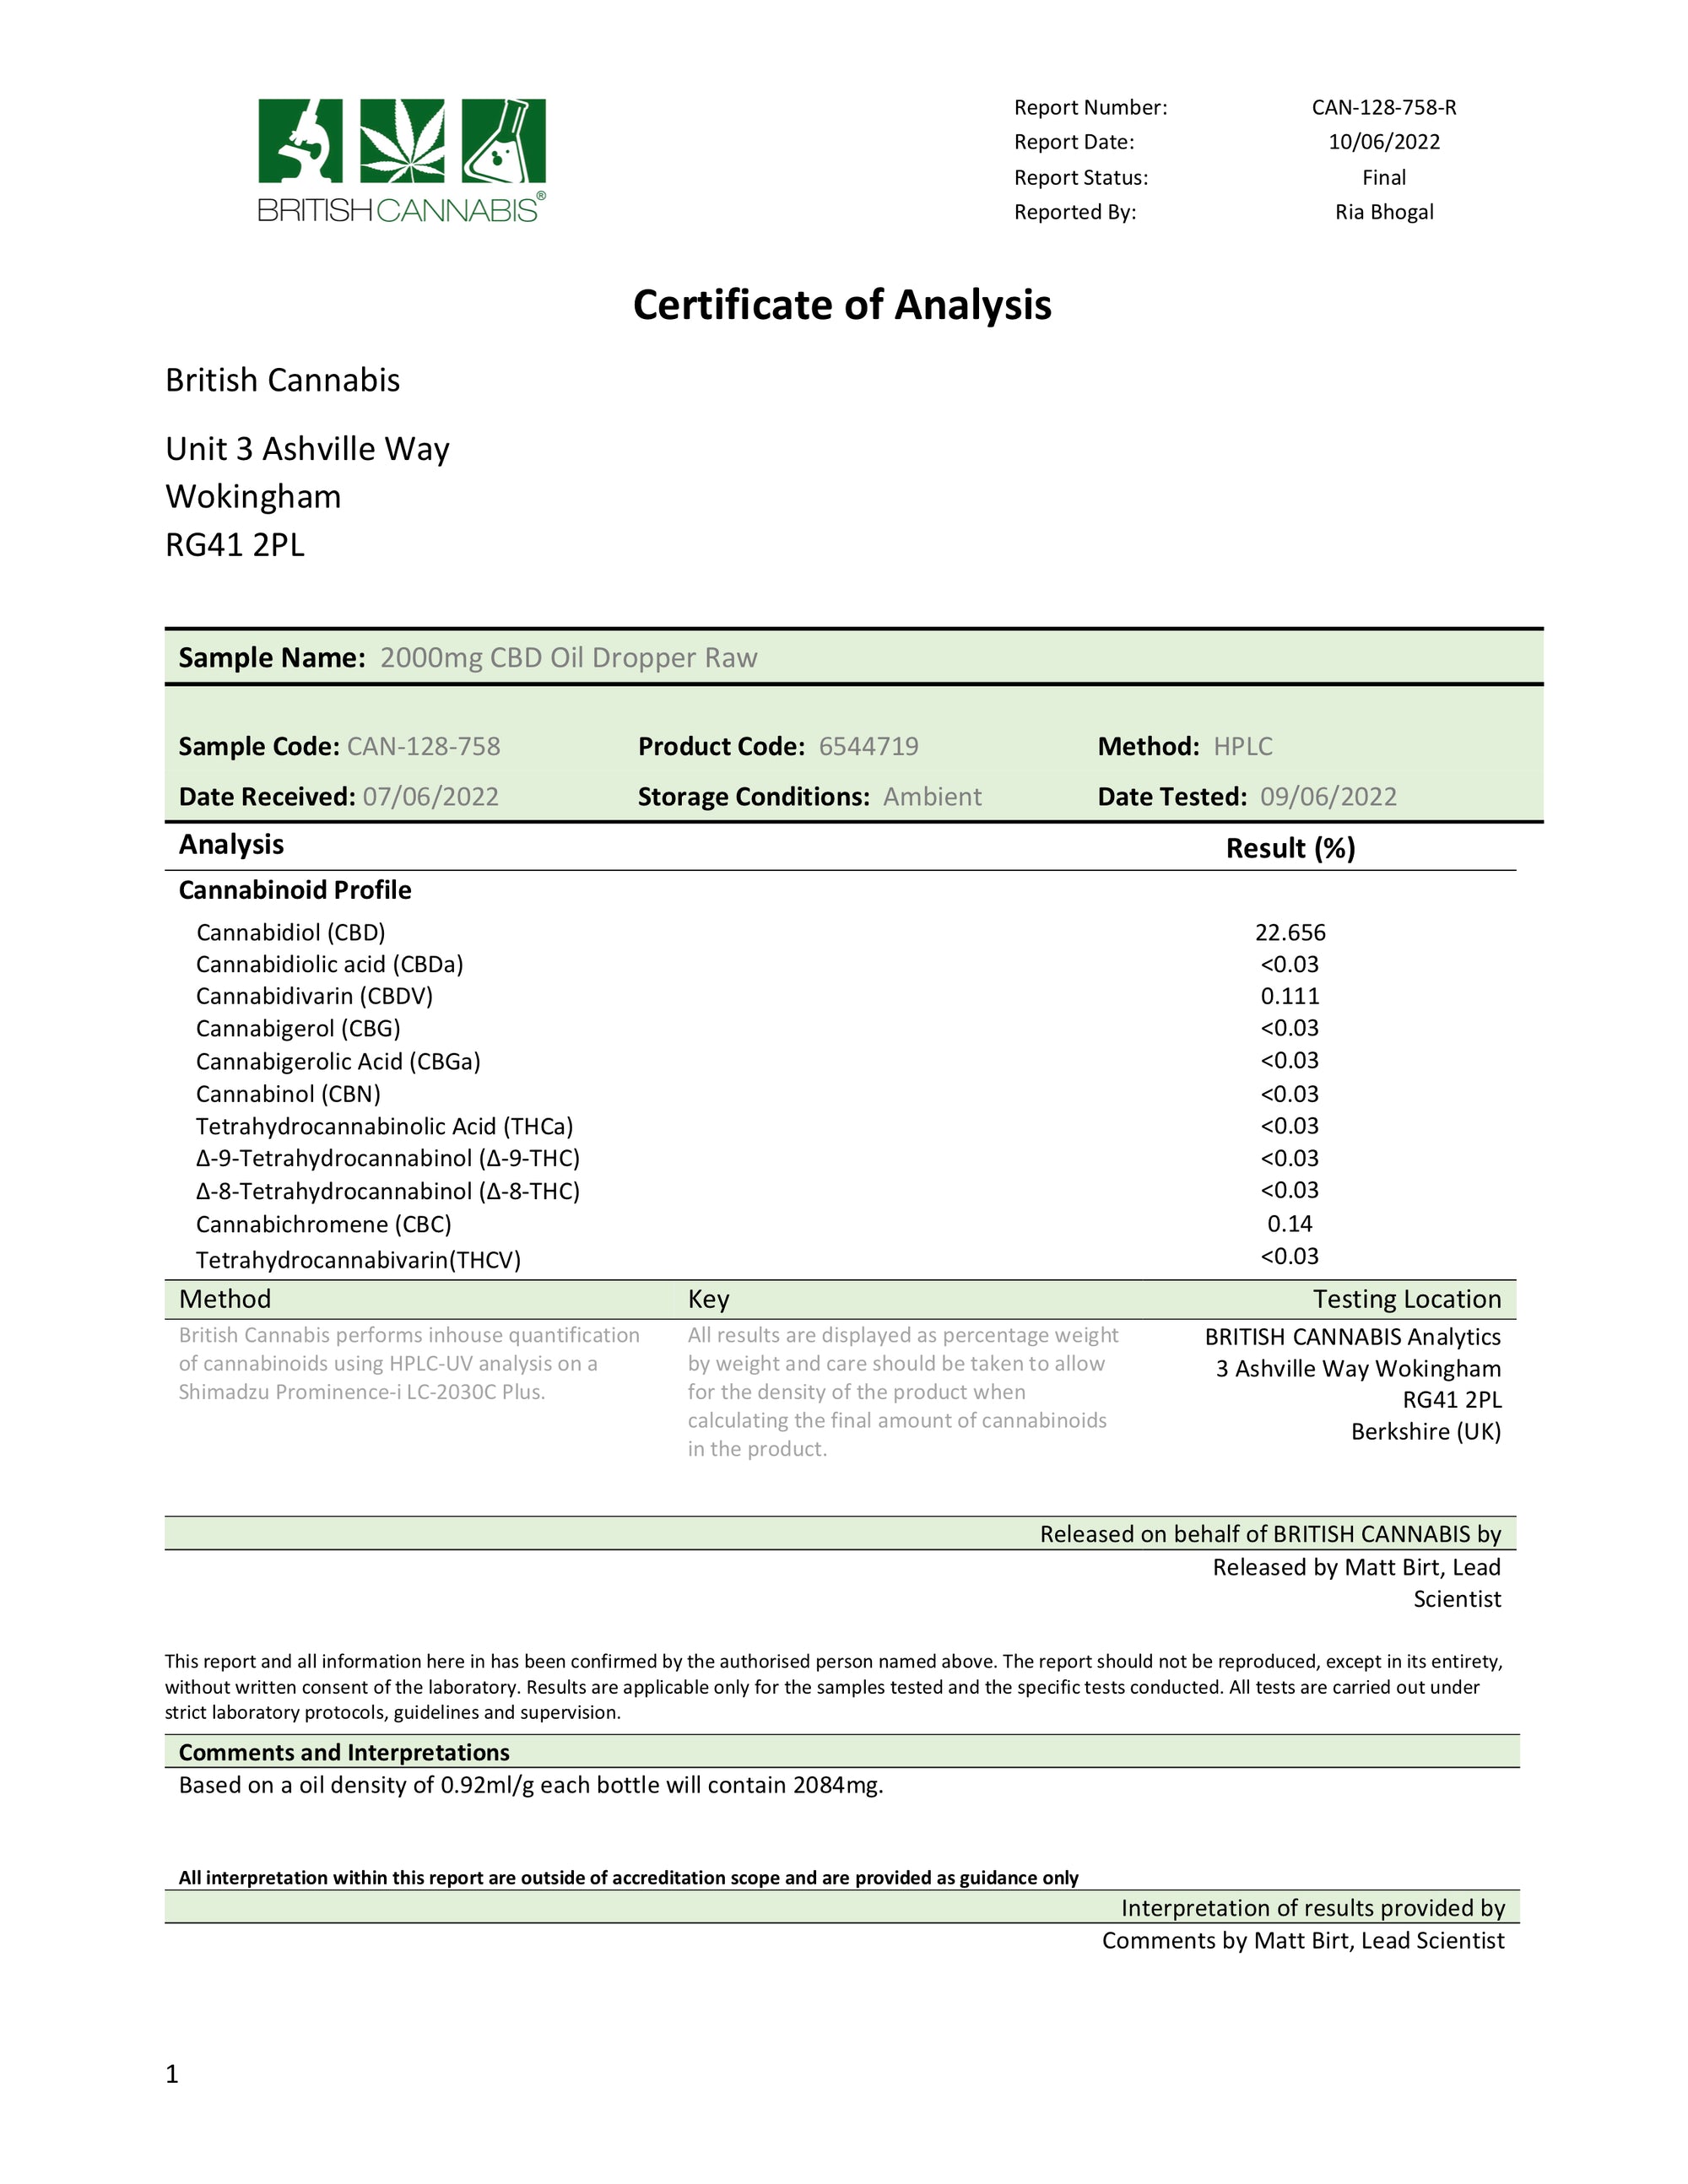 Pharmacy grade high quality raw CBD oil certificate of anyalysis